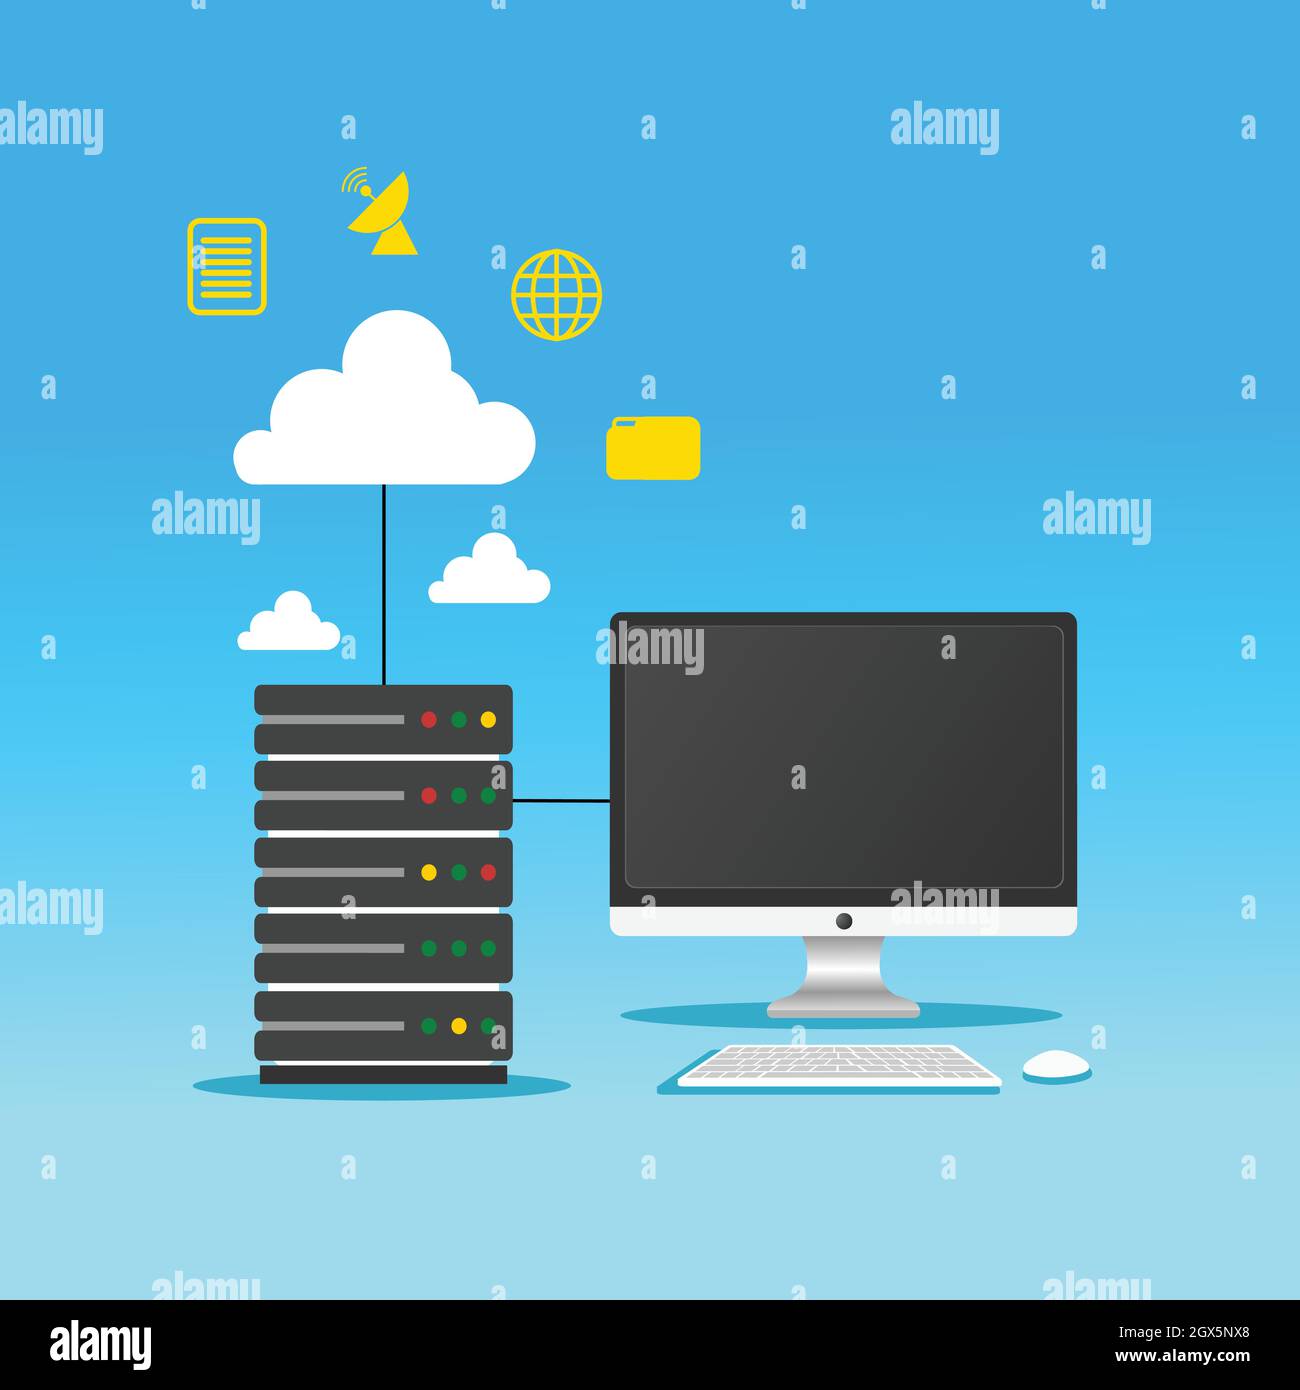 cloud technology flat vector illustration minimalist design Stock Vector